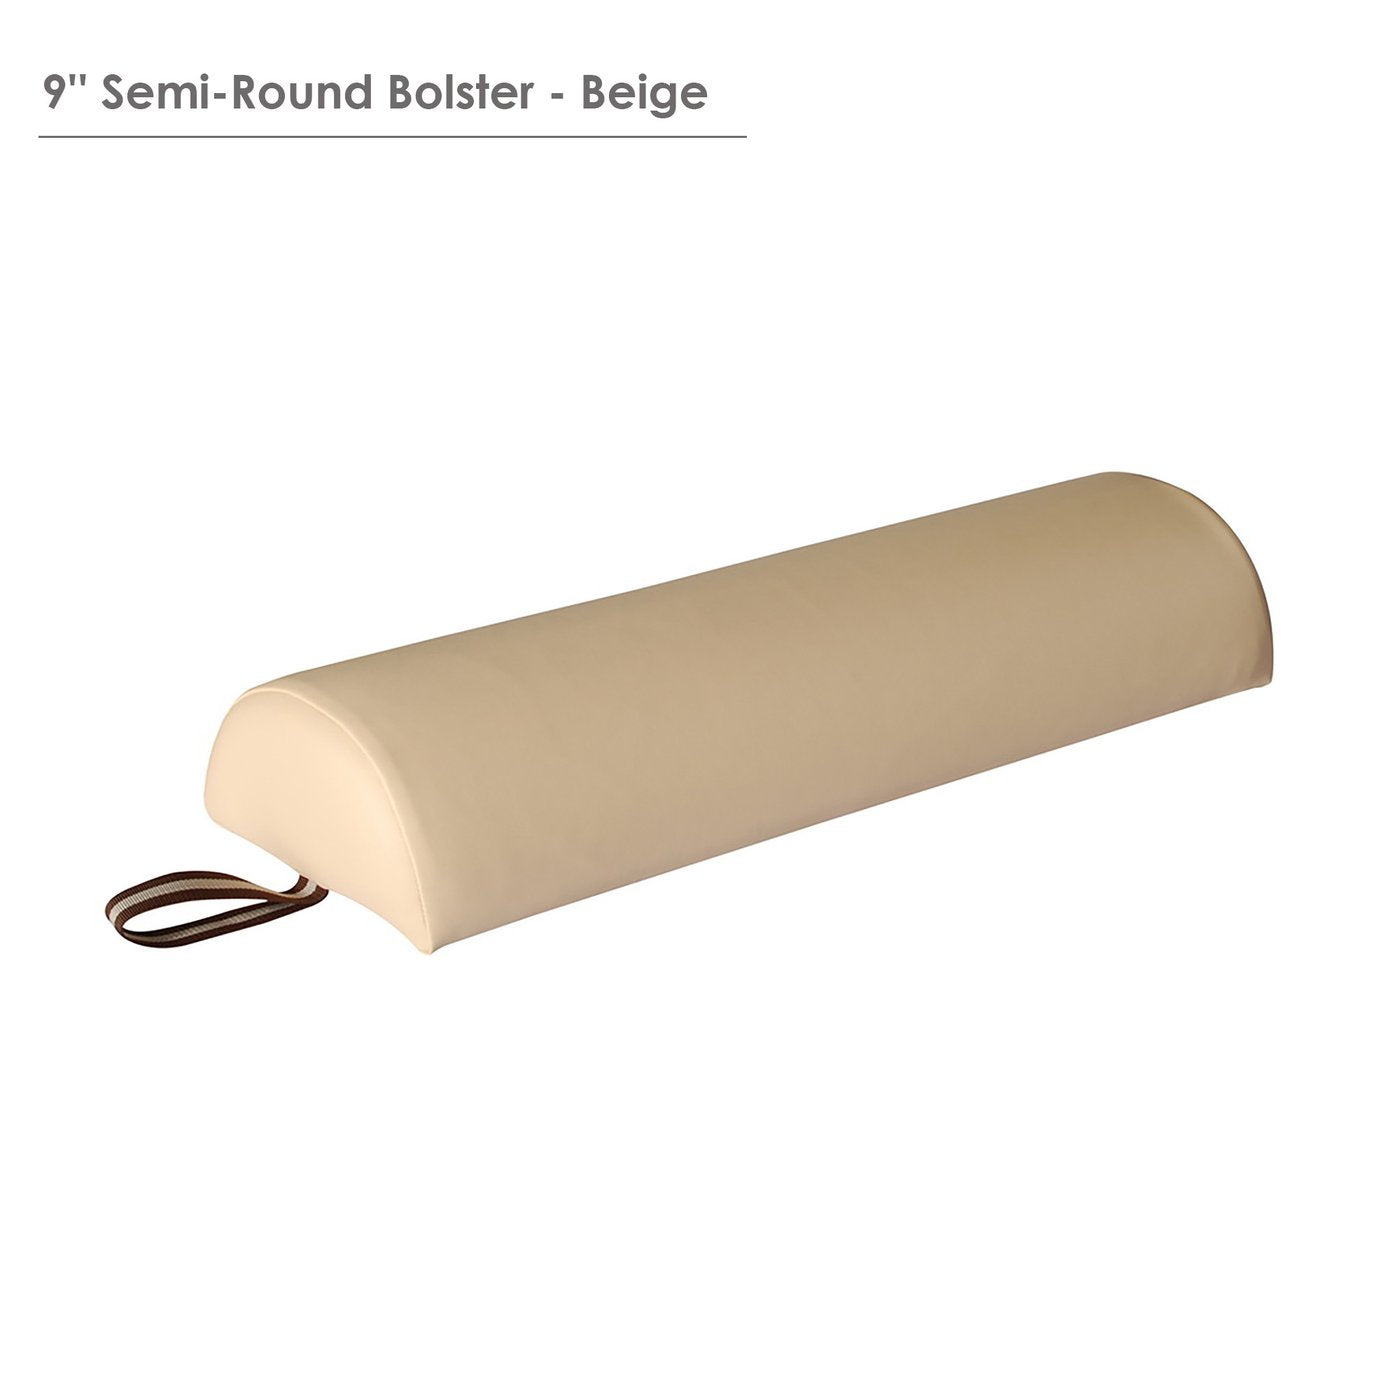 Large 9" Semi-Round Bolster